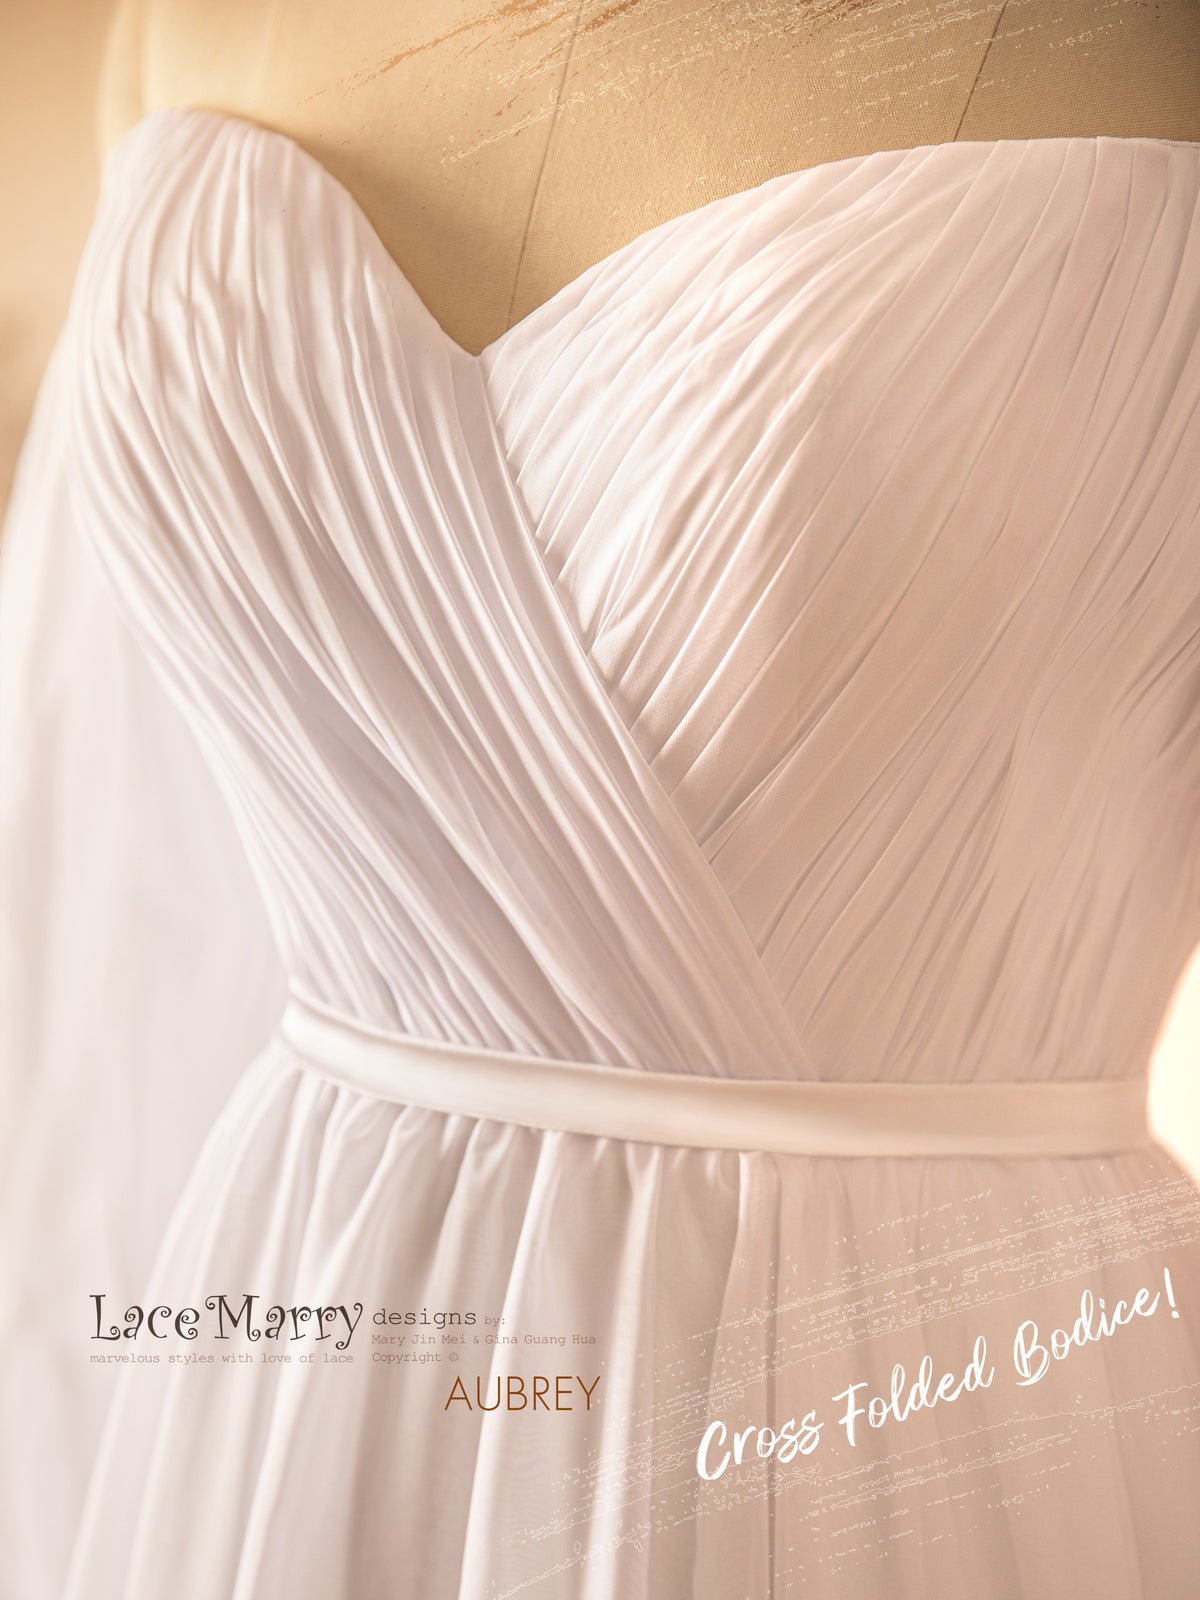 AUBREY / Long Puff Sleeves Plain Wedding Dress